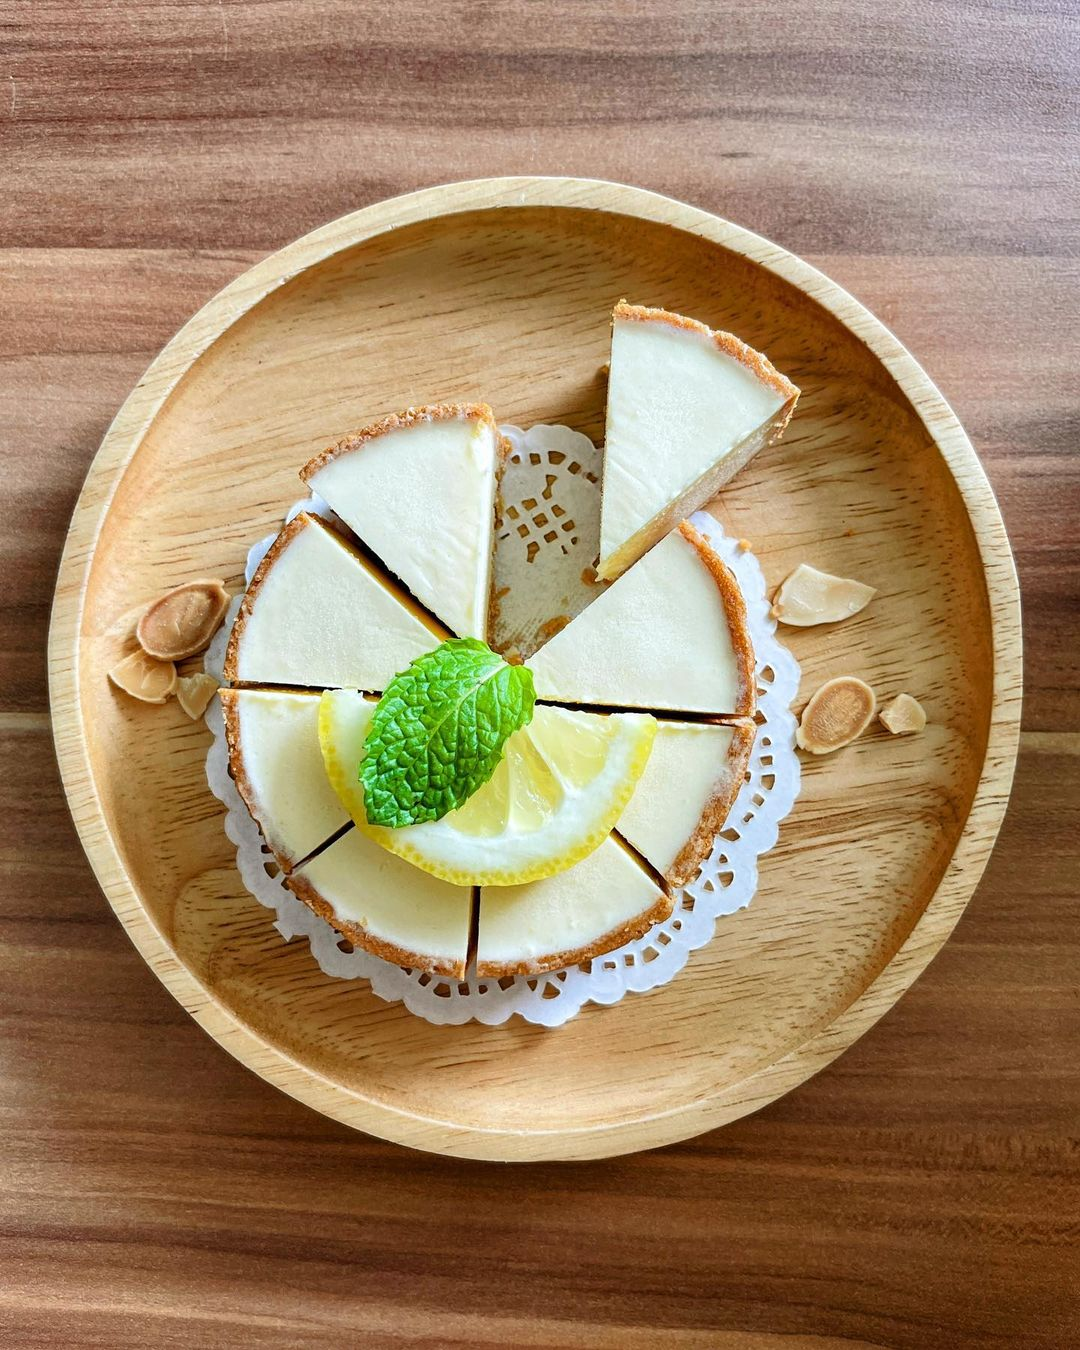 jb cafe guide - Sorella Cafe kori lemon cake